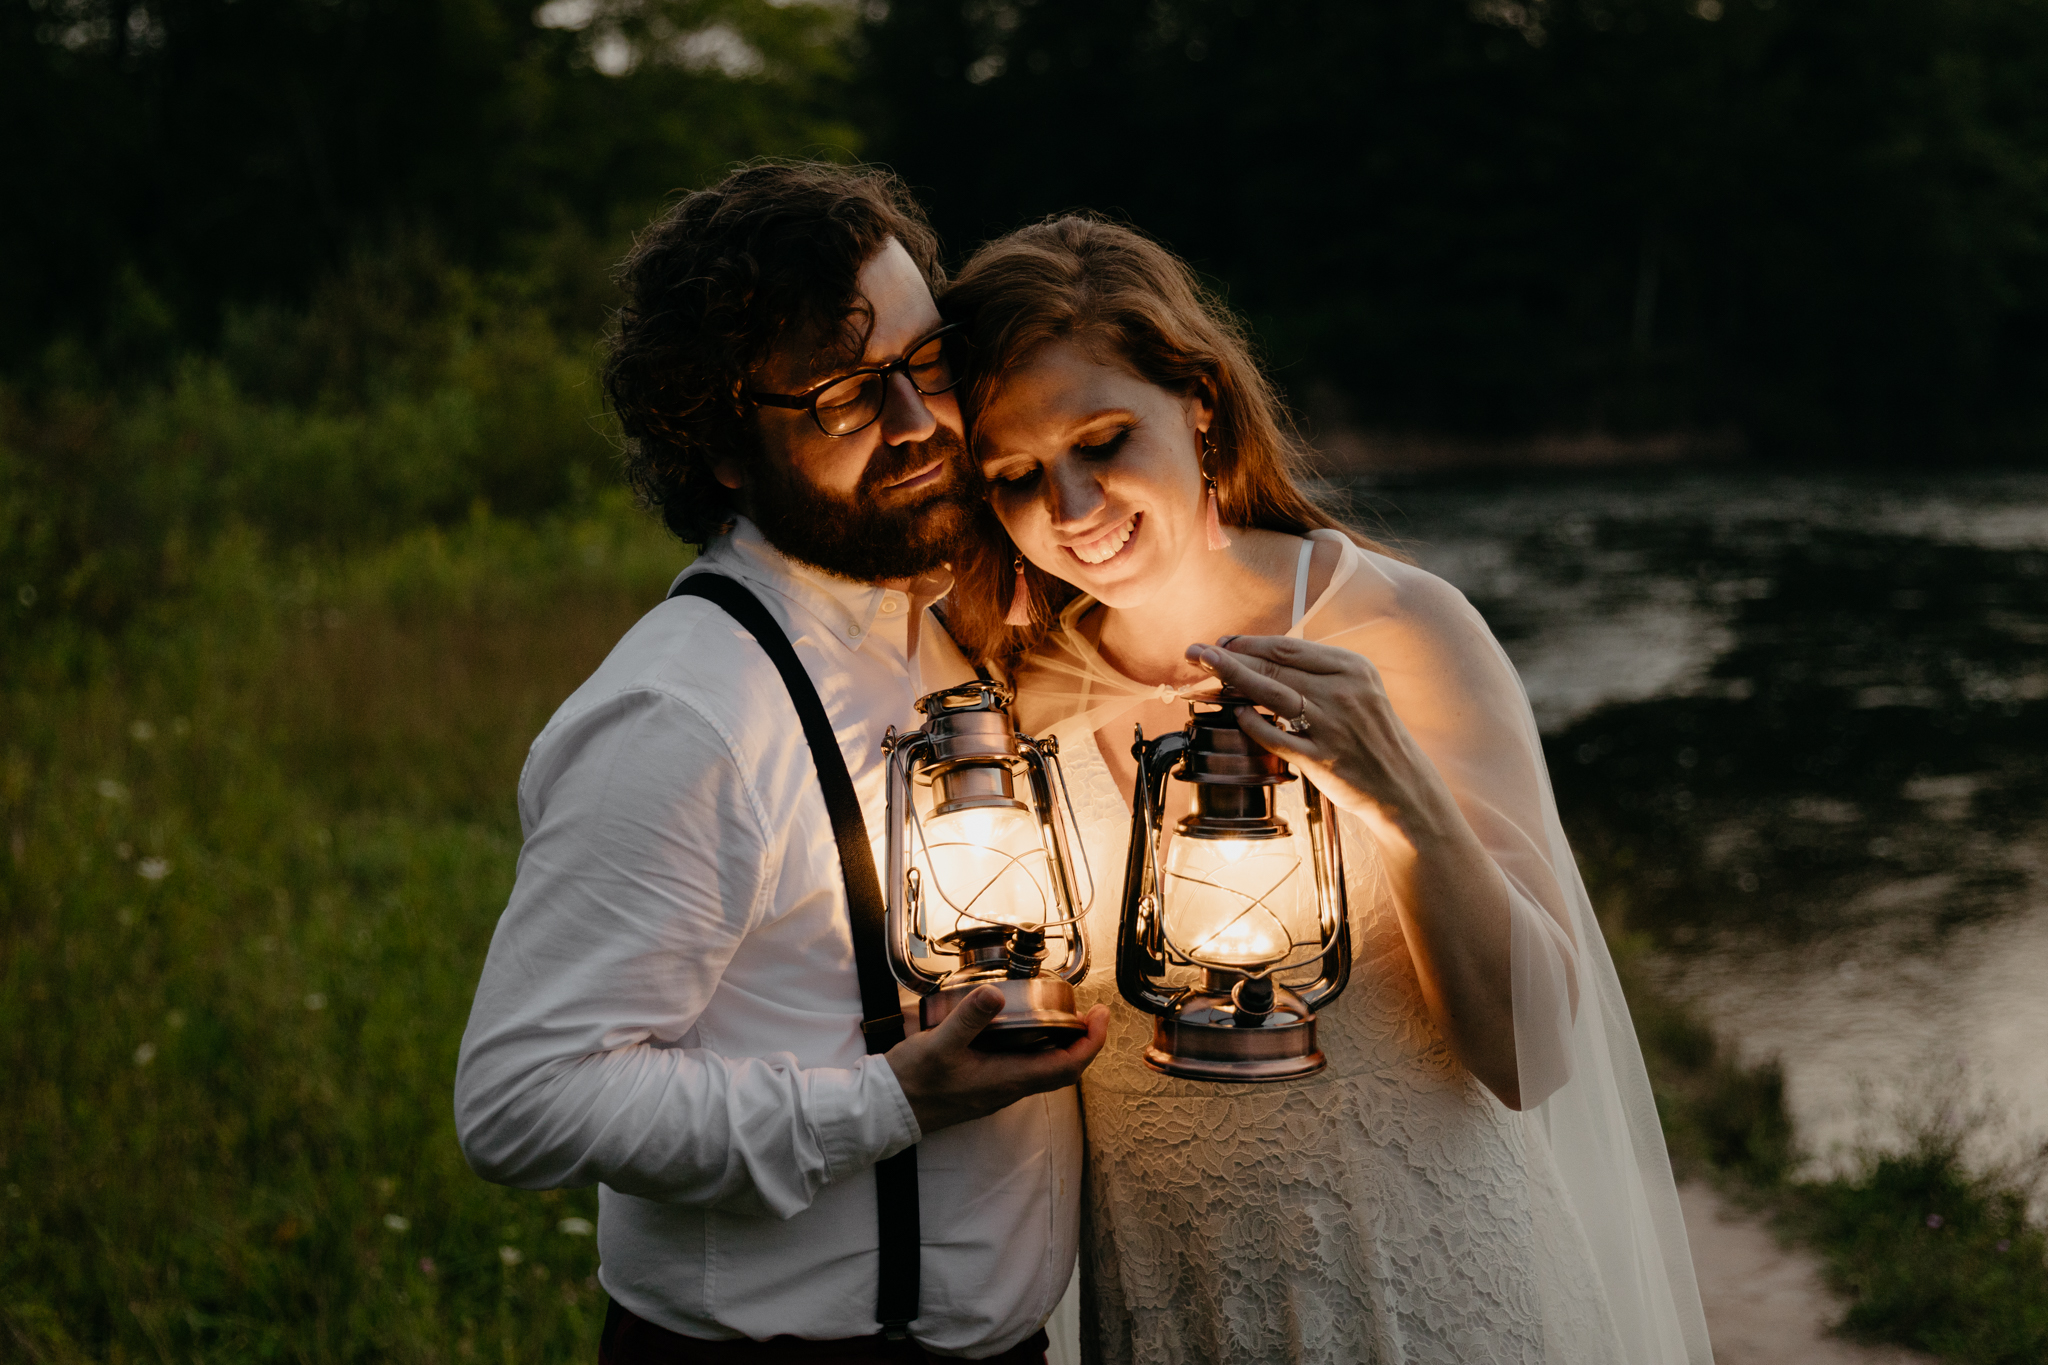 Lantern photos during this Michigan Forest elopement